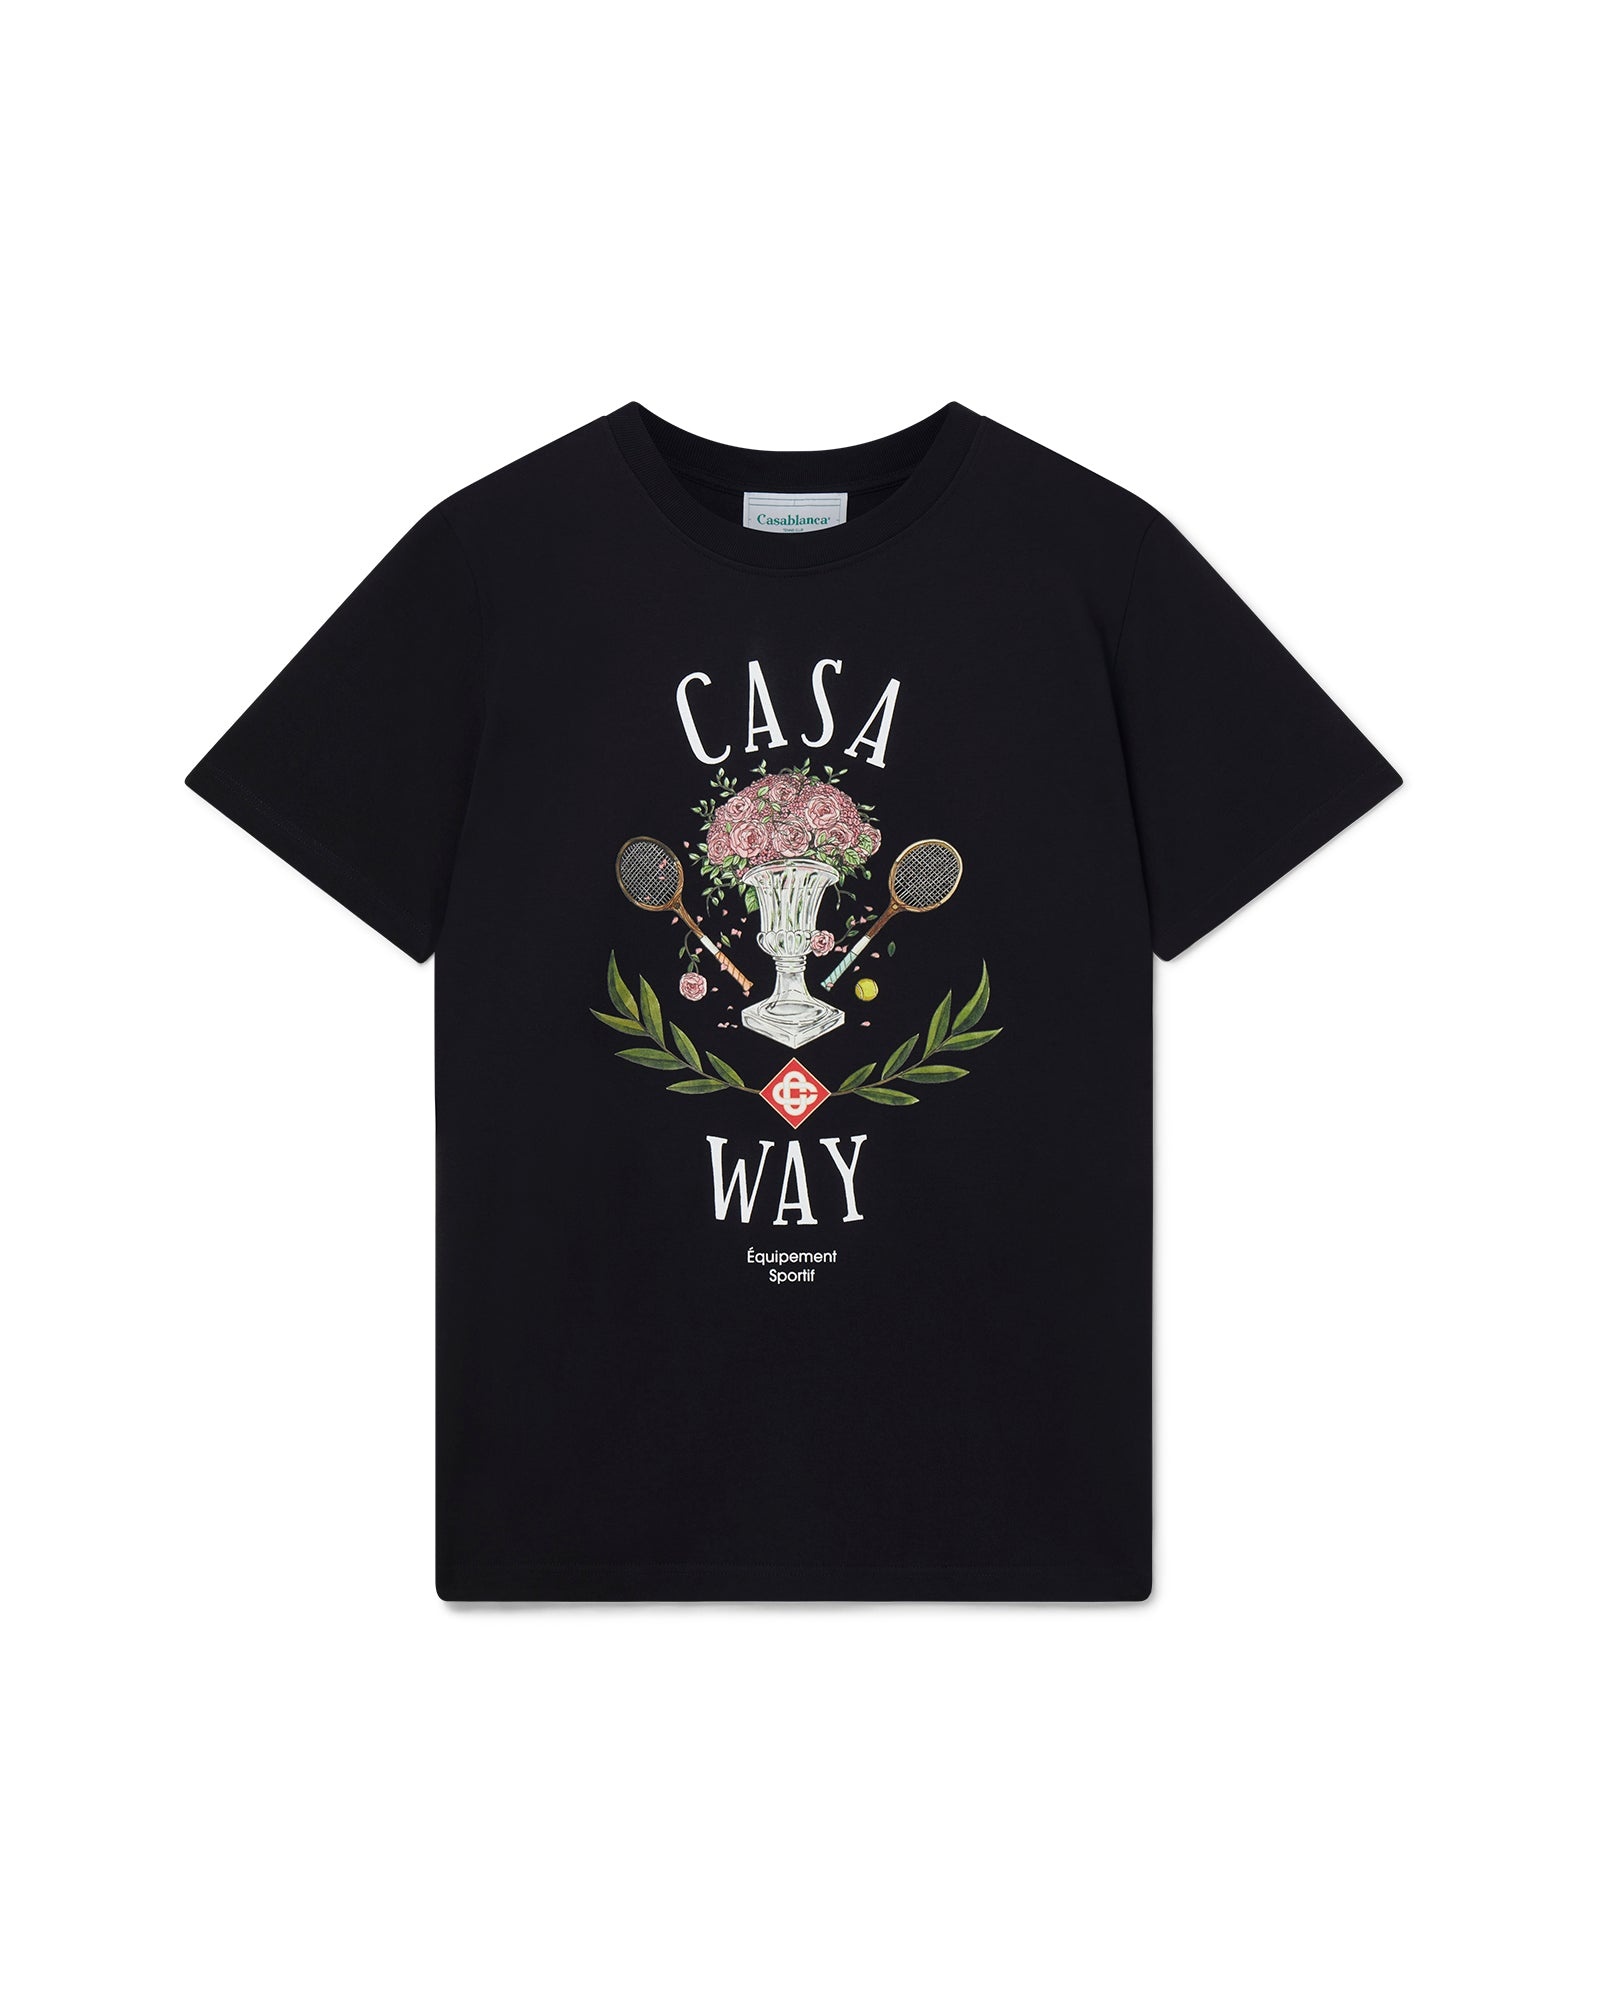 Casa Way T-Shirt - 1